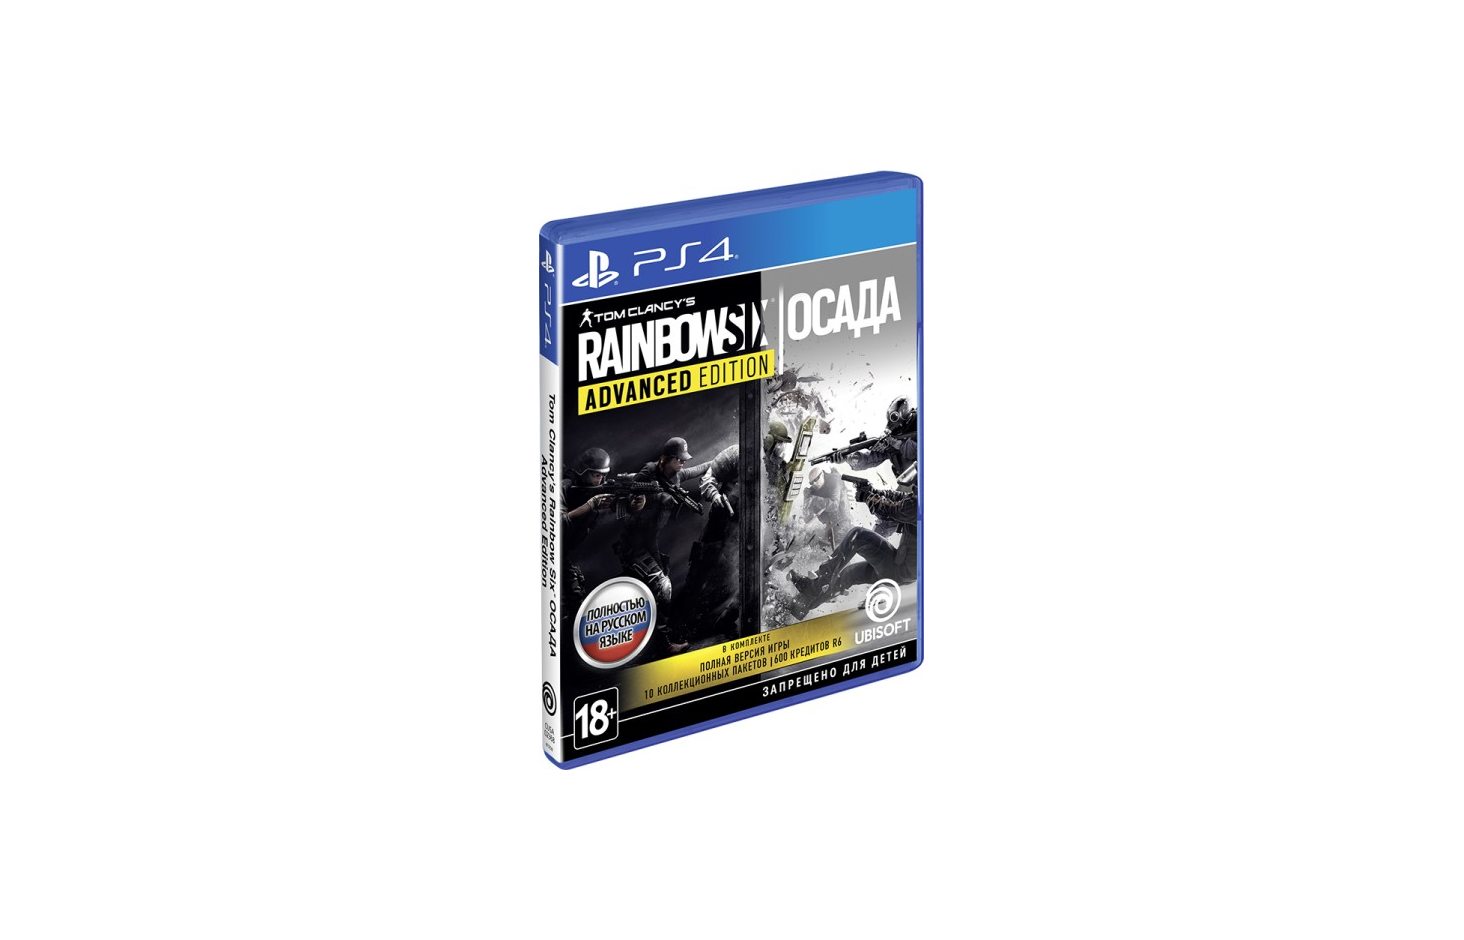 PS 4 Tom Clancy's Rainbow Six Осада Advanced Edition PS 4